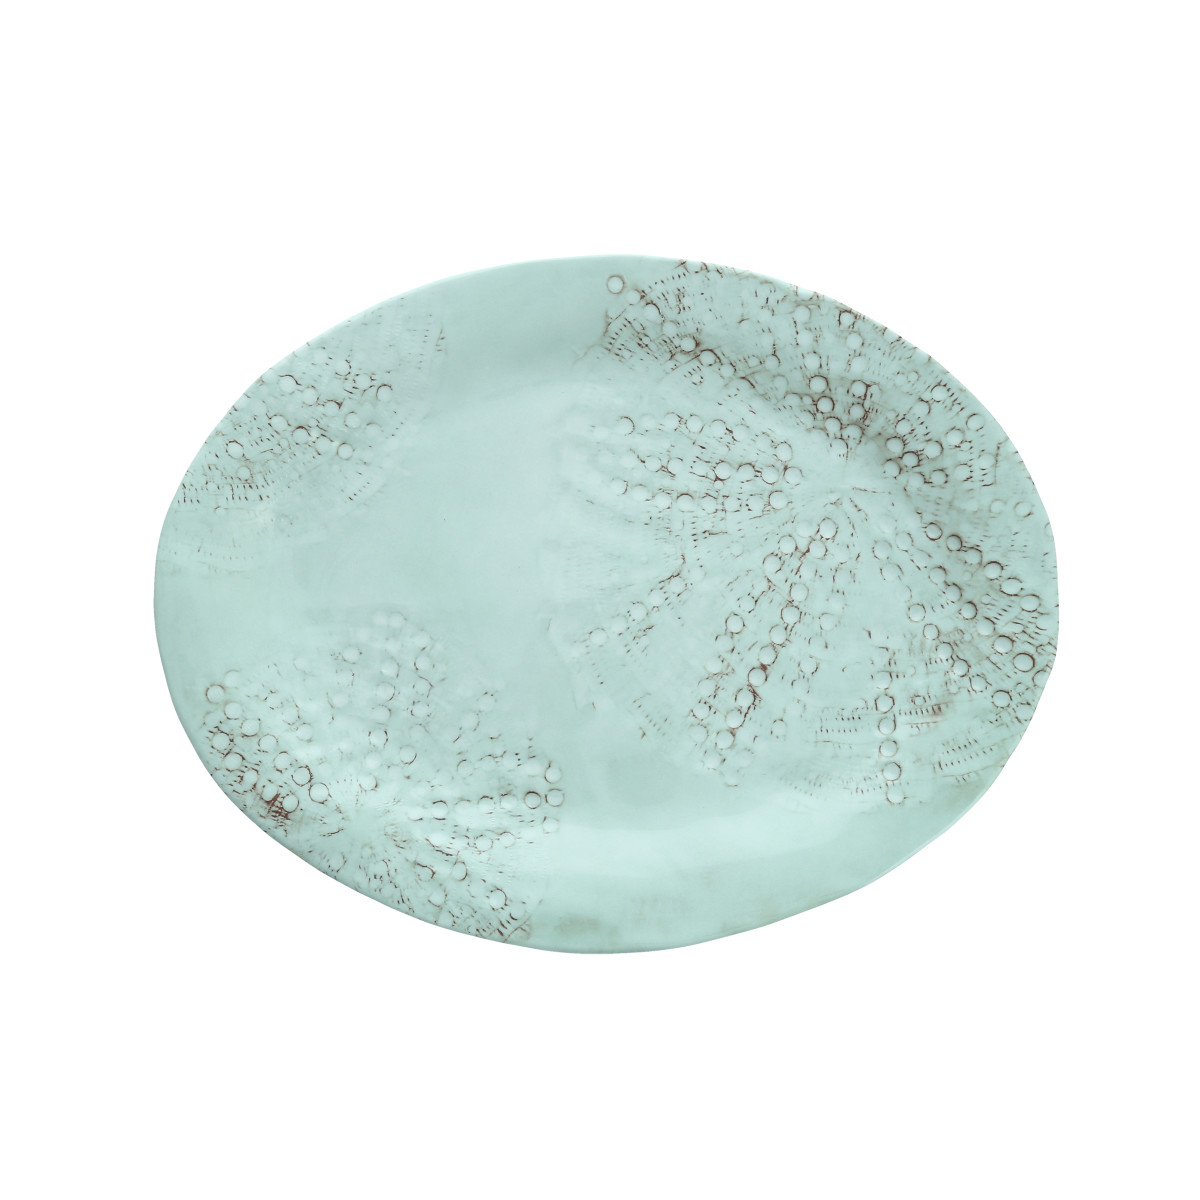 Sanibel Green Oval Platter 15x12"